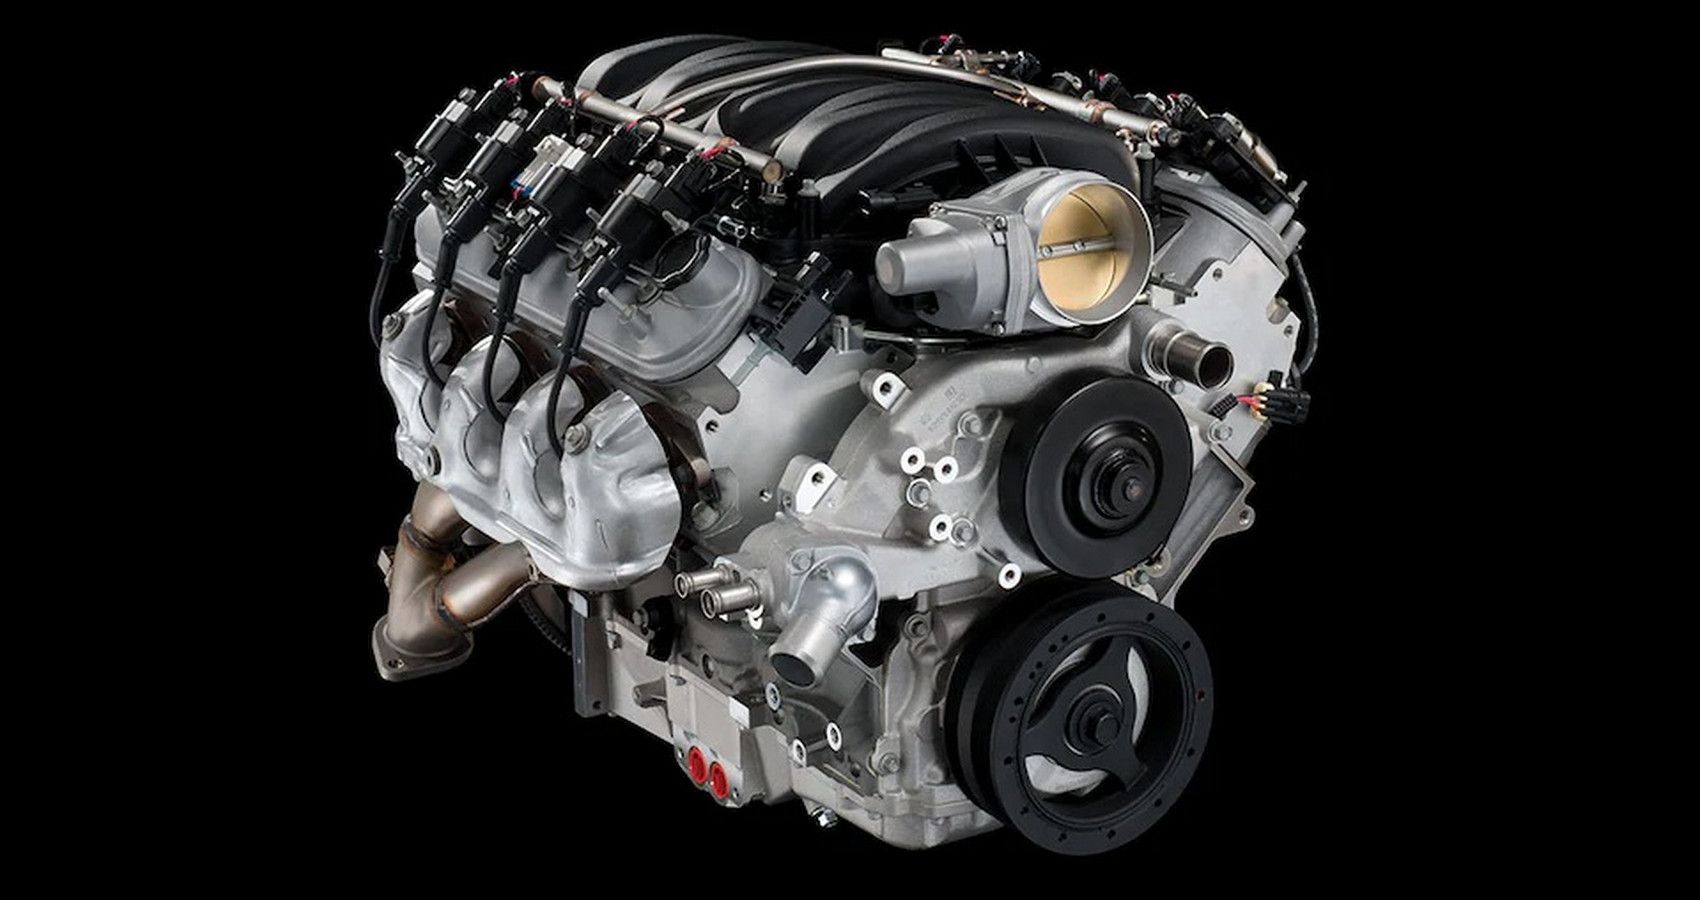 LS7 engine, unit by itself